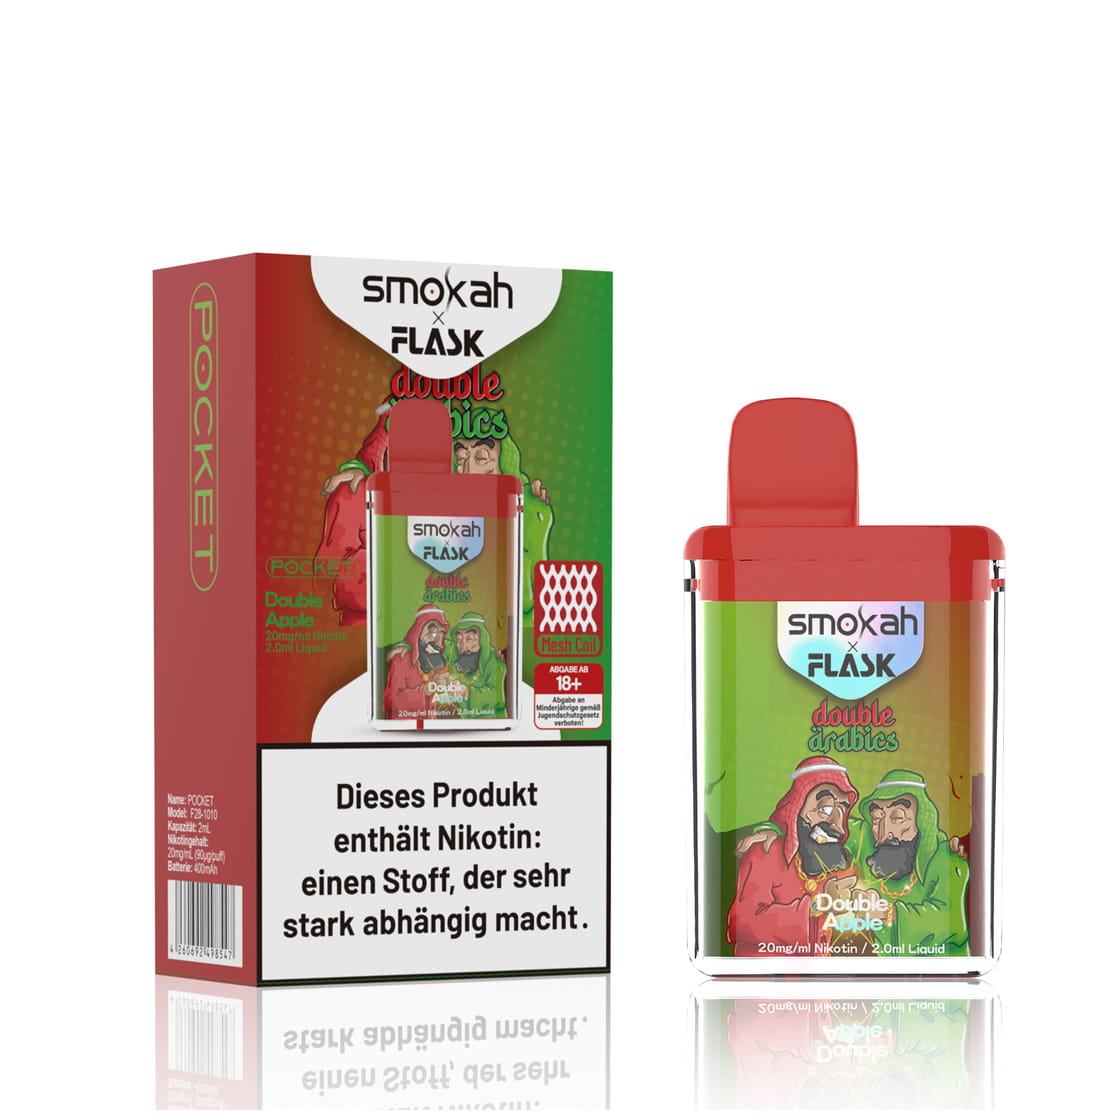 Smokah x Flask Pocket - Einweg E-Shisha - Double Arabics 2% Nikotin